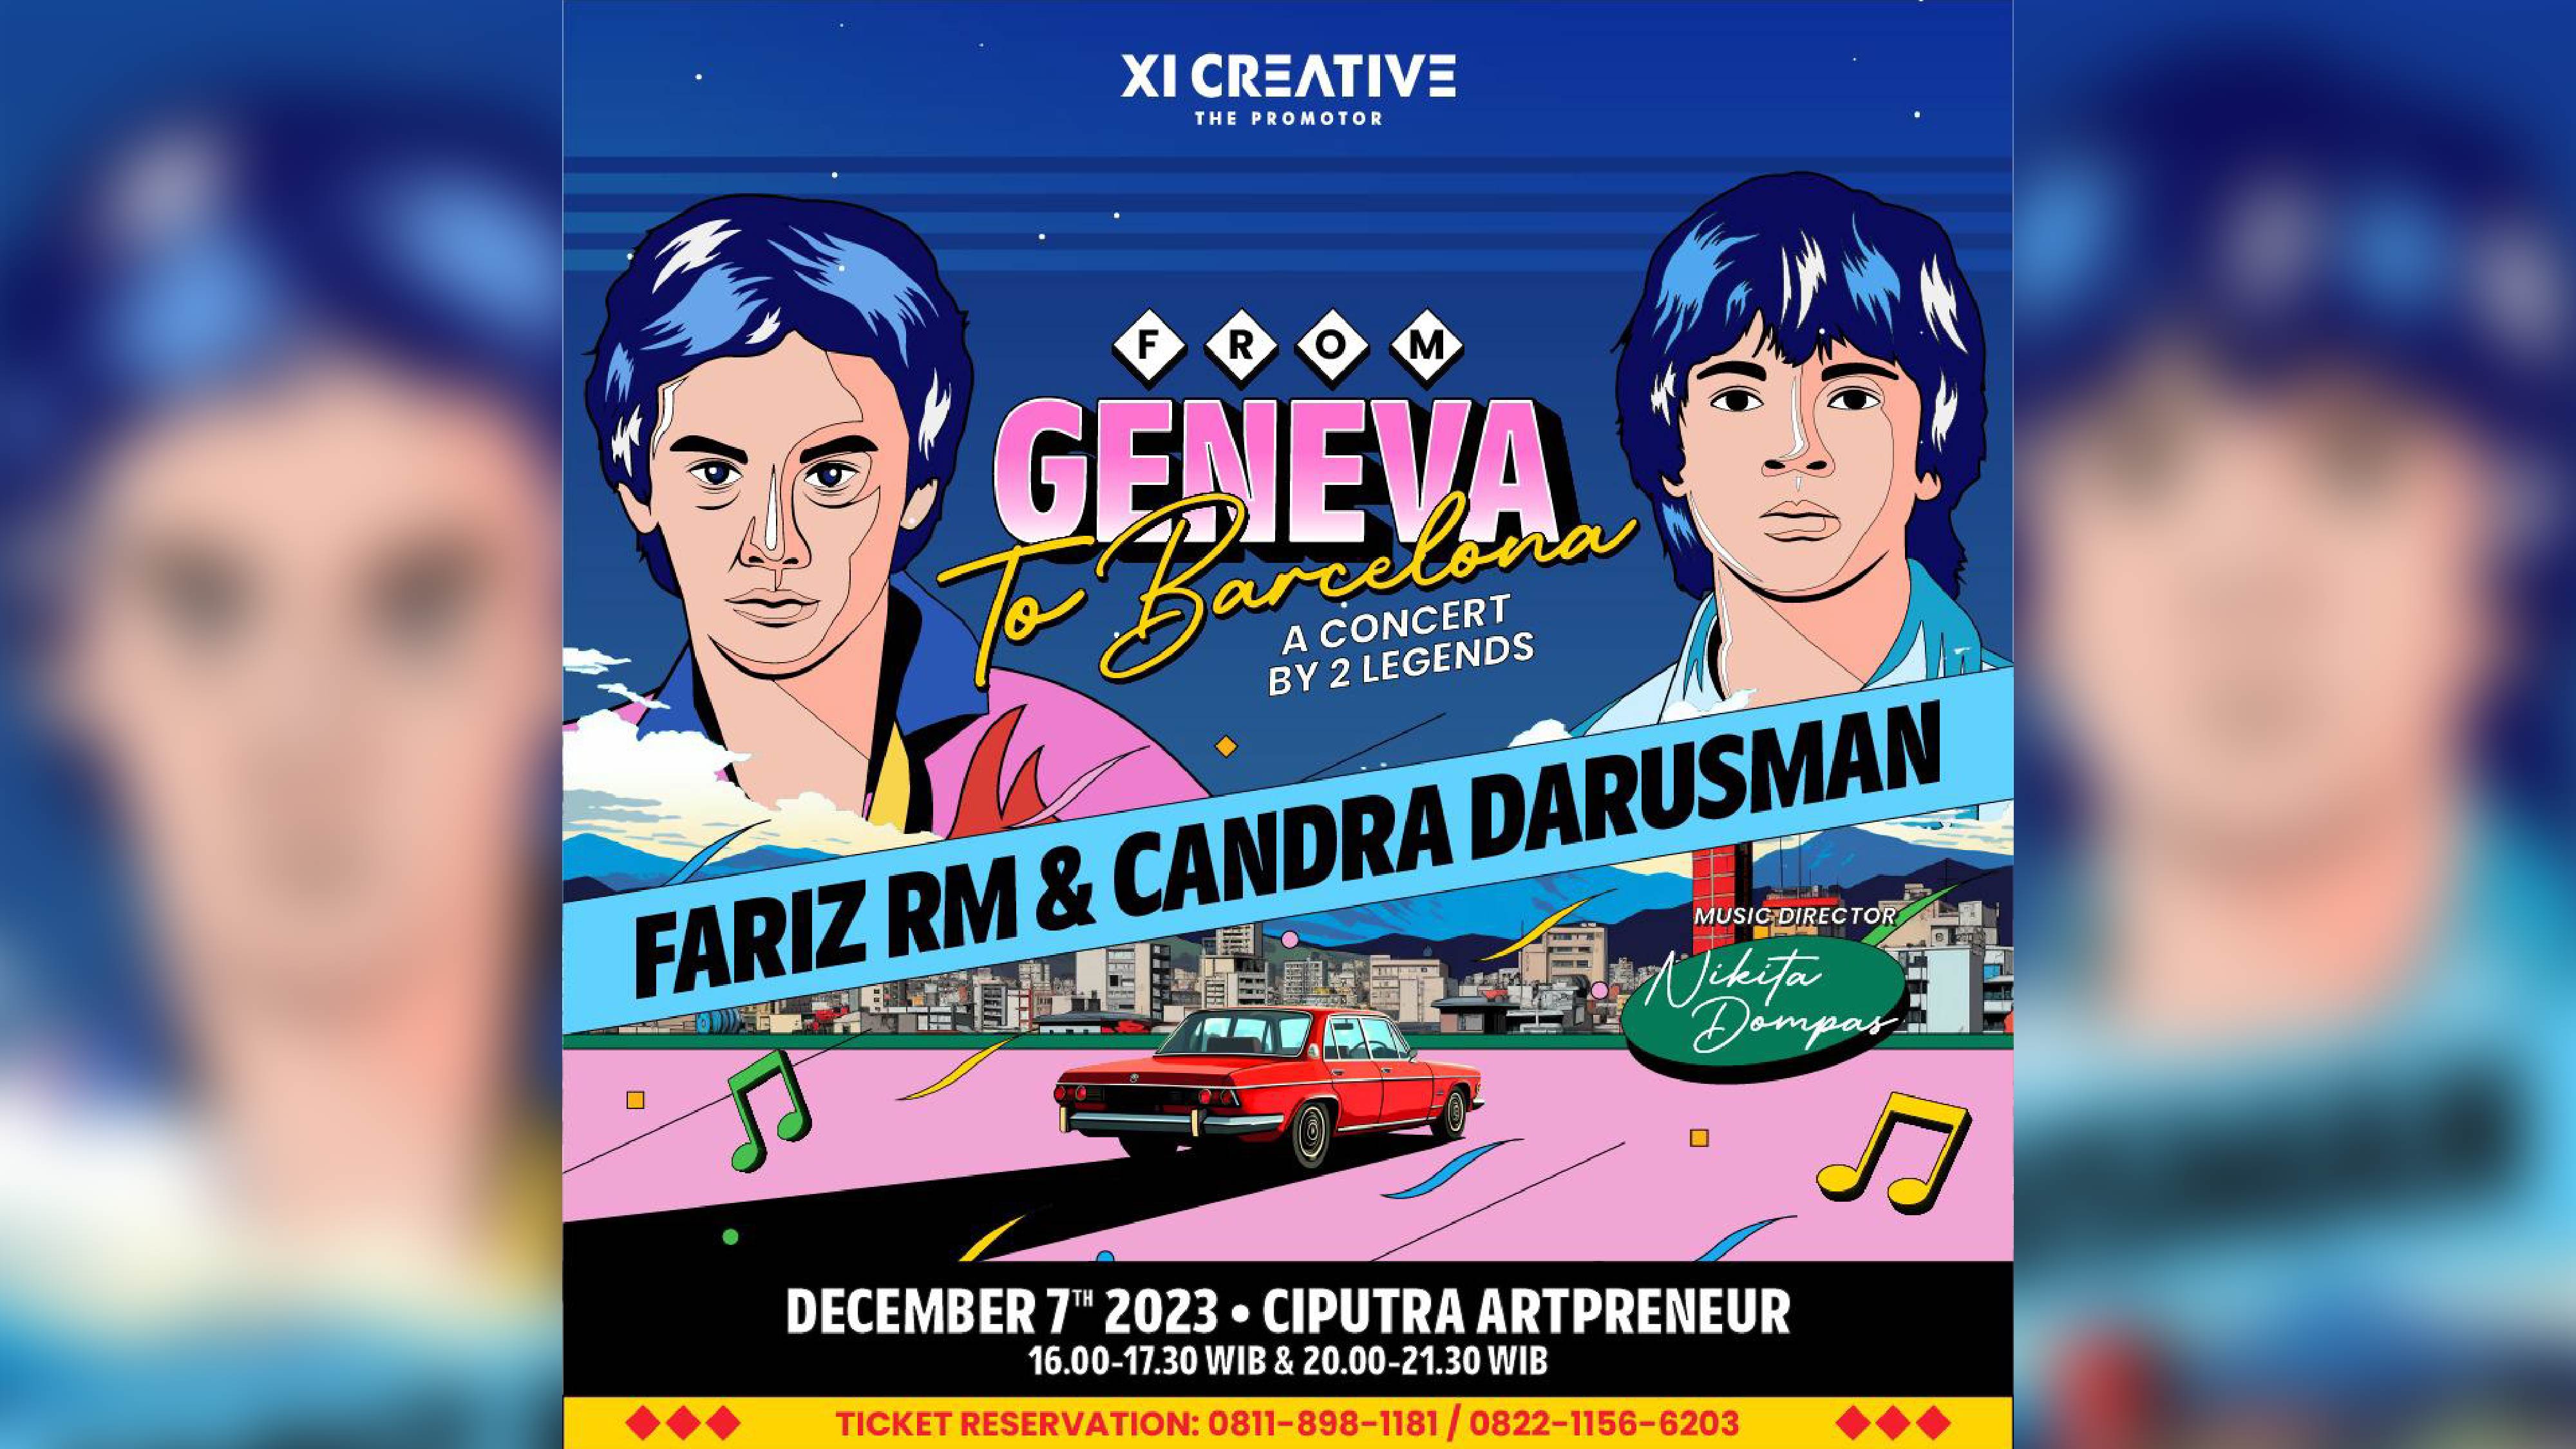  Concert by 2 Legends Fariz RM & Candra Darusman - FROM GENEVA TO BARCELONA